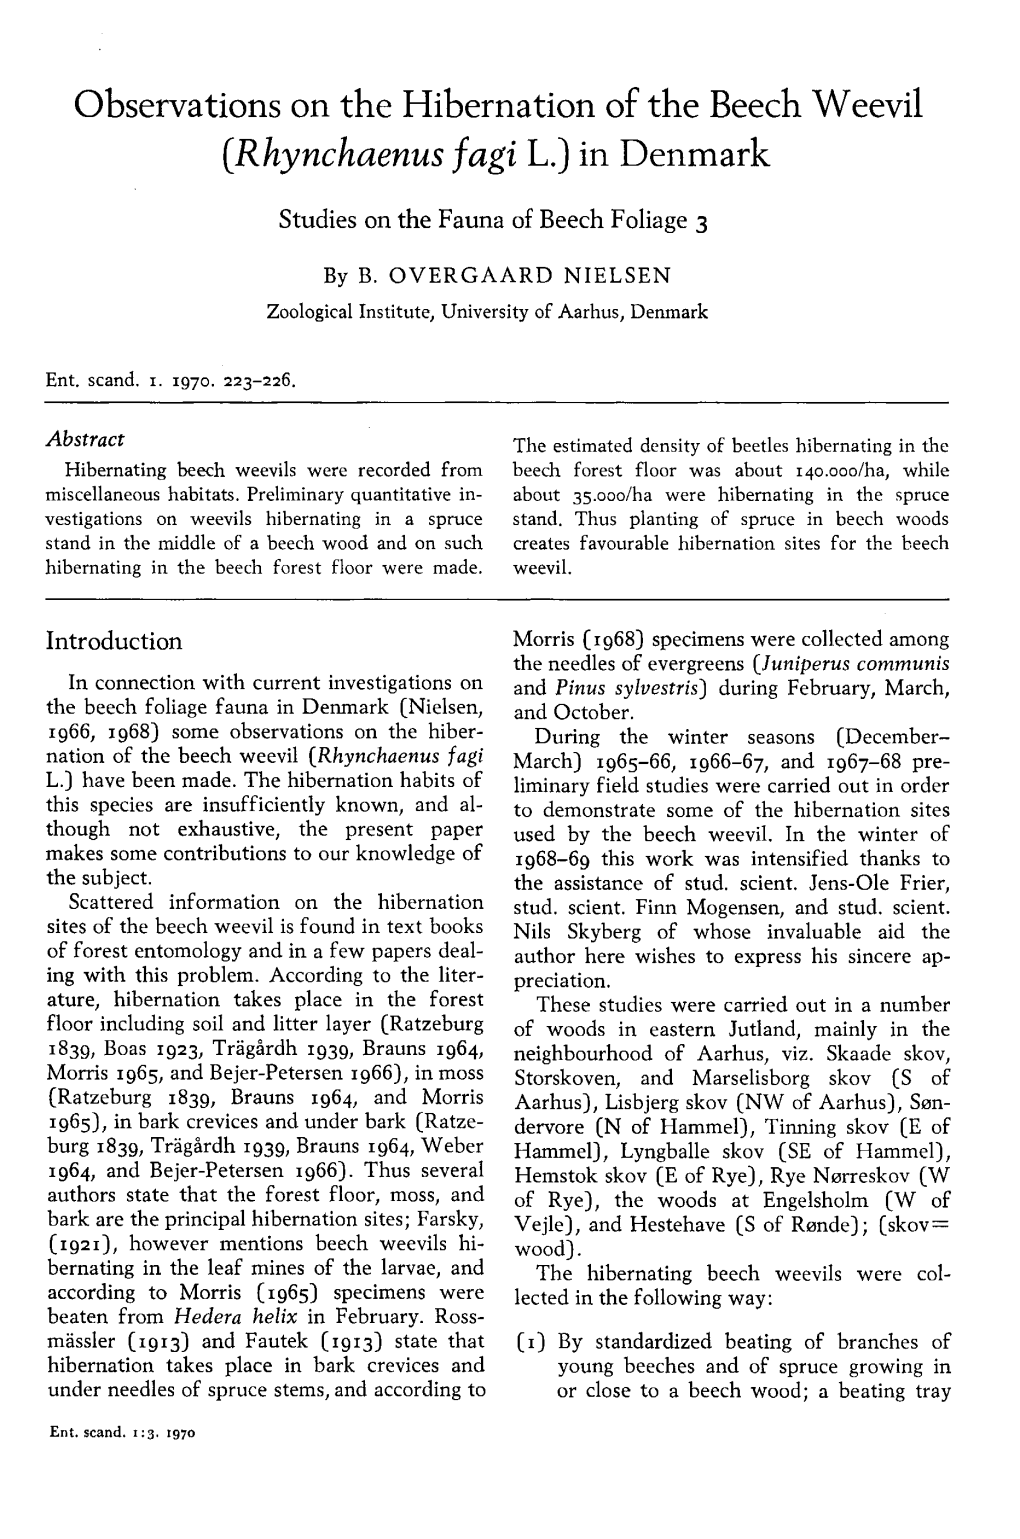 Observations on the Hibernation of the Beech Weevil (Rhynchaenus Fagi